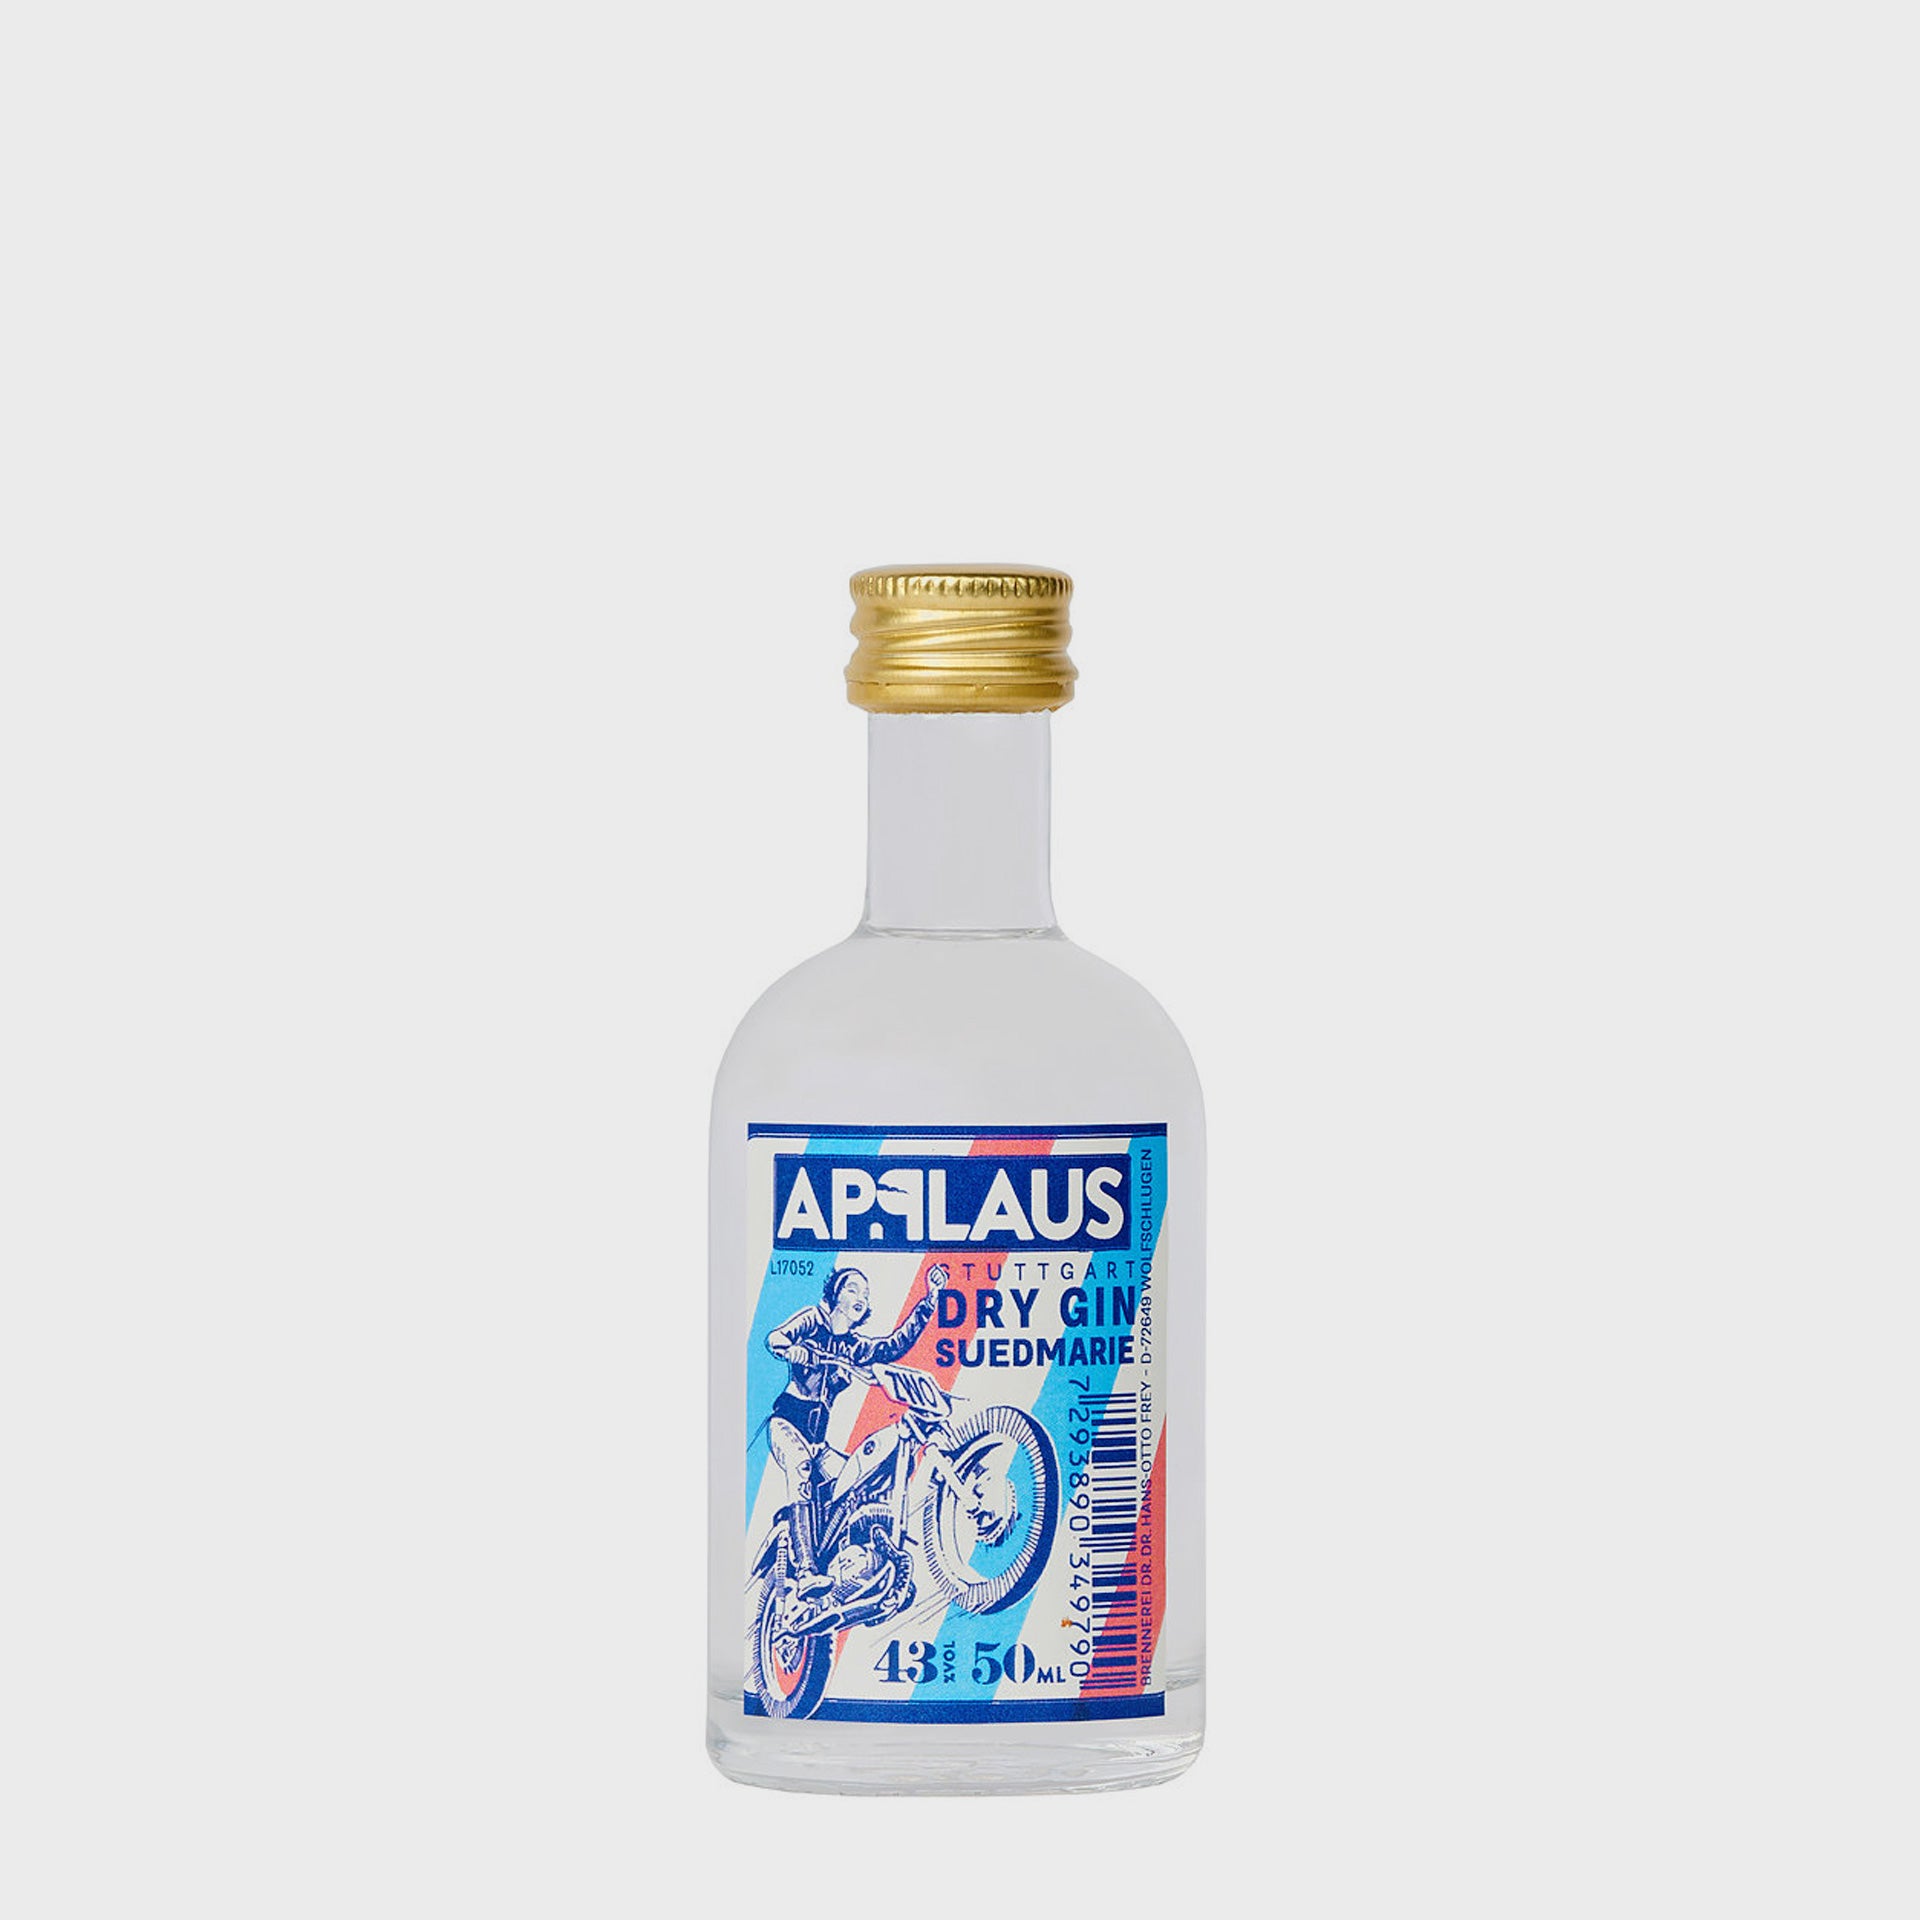 Applaus 50ml Gin Suedmarie – Dry Gin Applaus